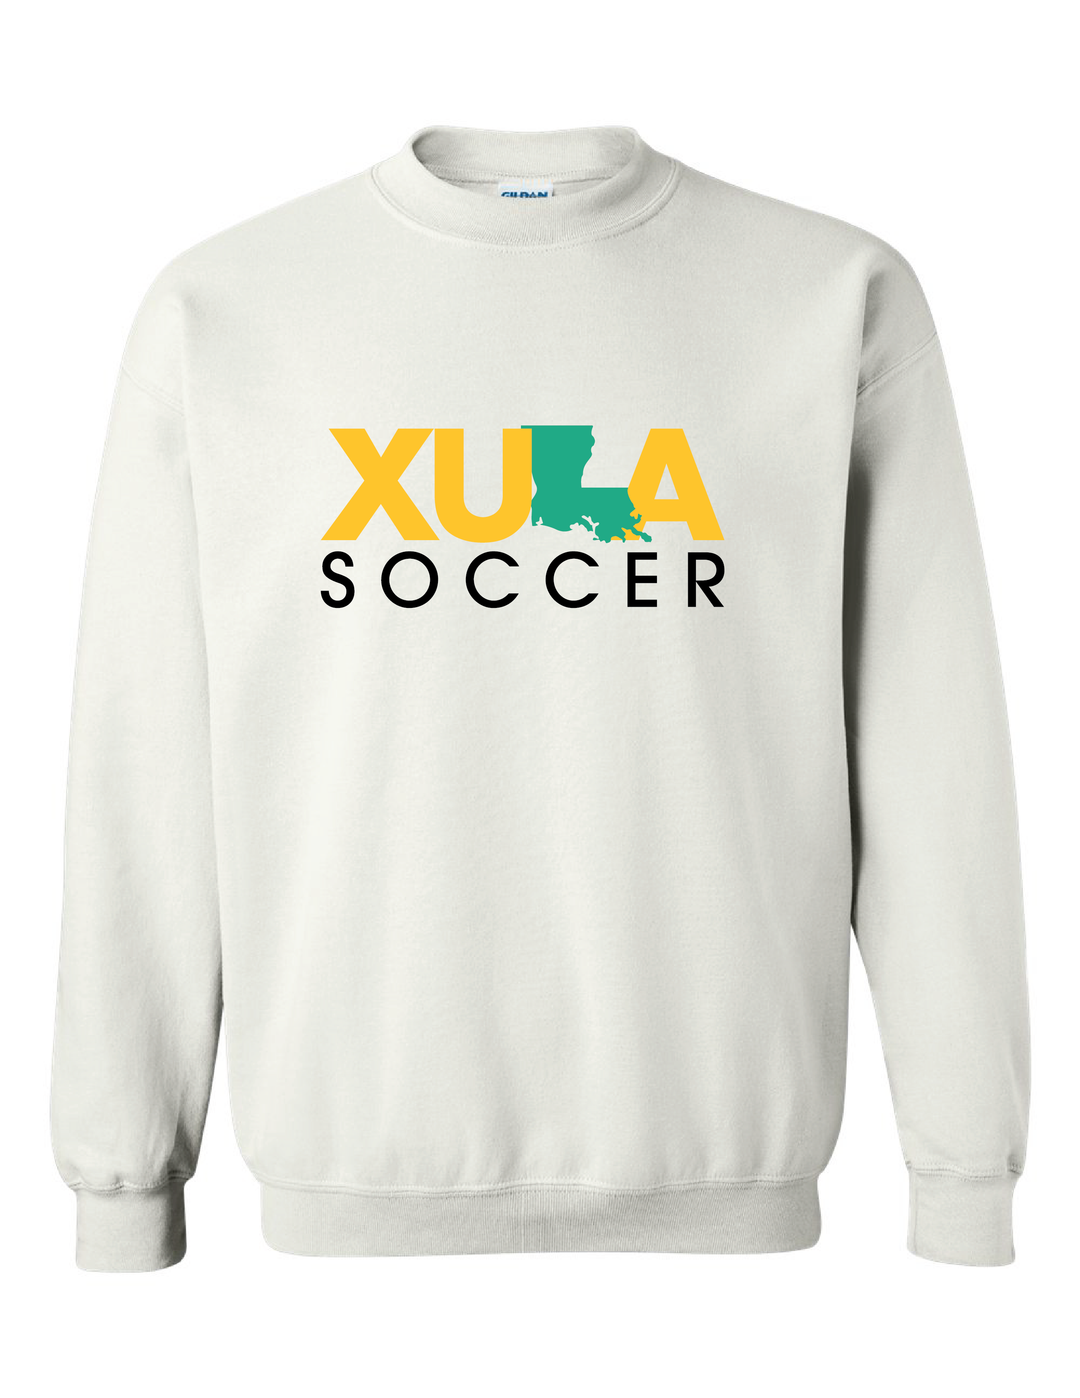 XULA Soccer Crewneck Sweatshirt Xavier University White Mens Small - Third Coast Soccer